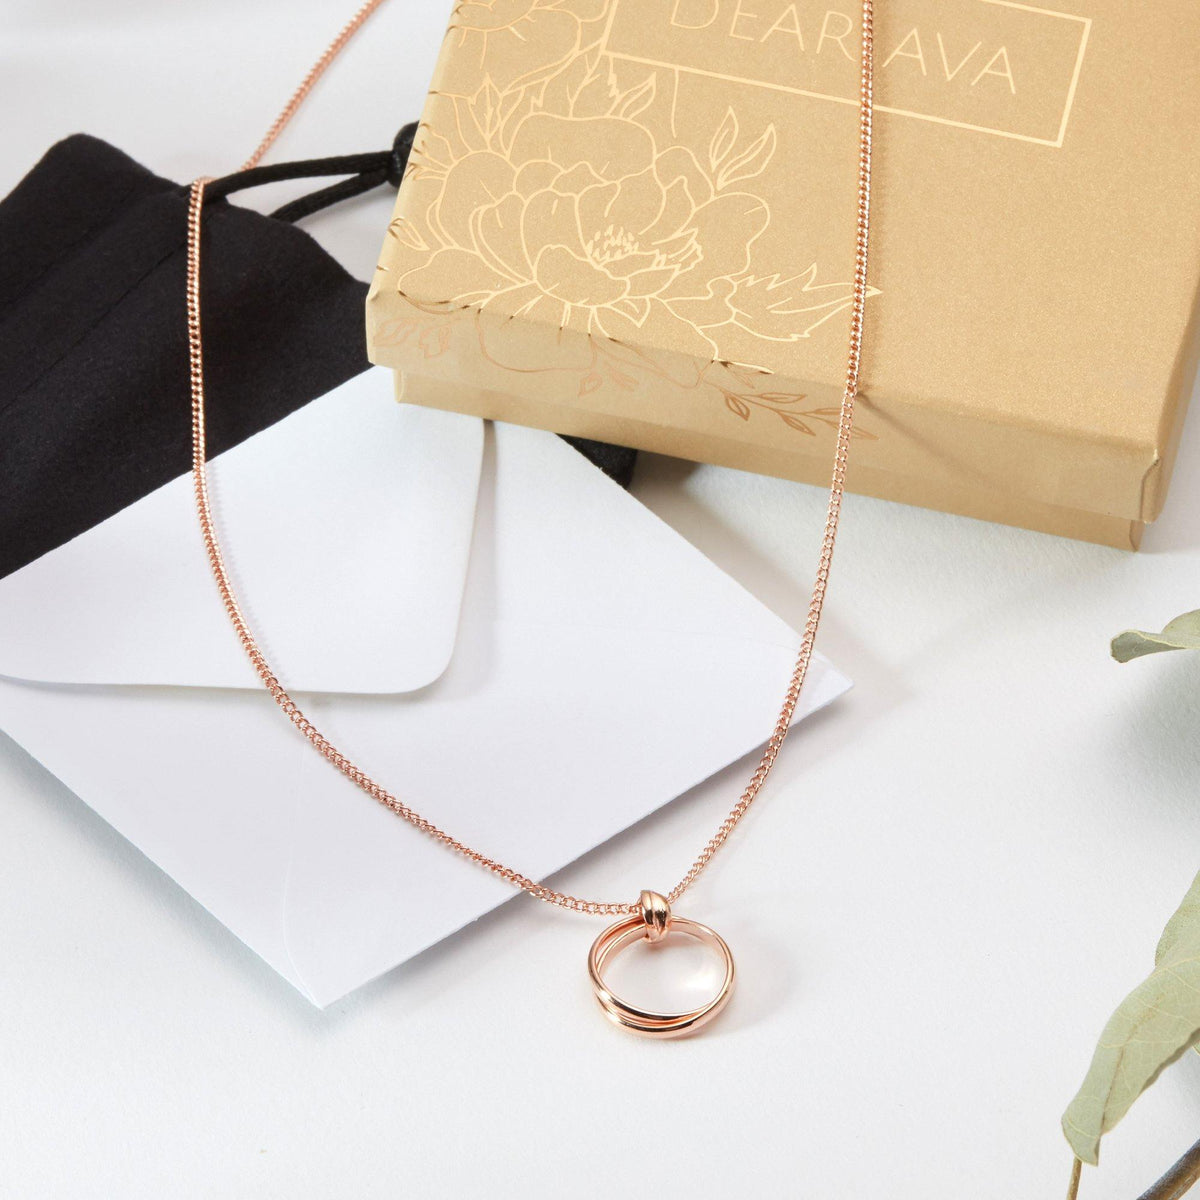 Mimi Necklace - Dear Ava, Jewelry / Necklaces / Pendants